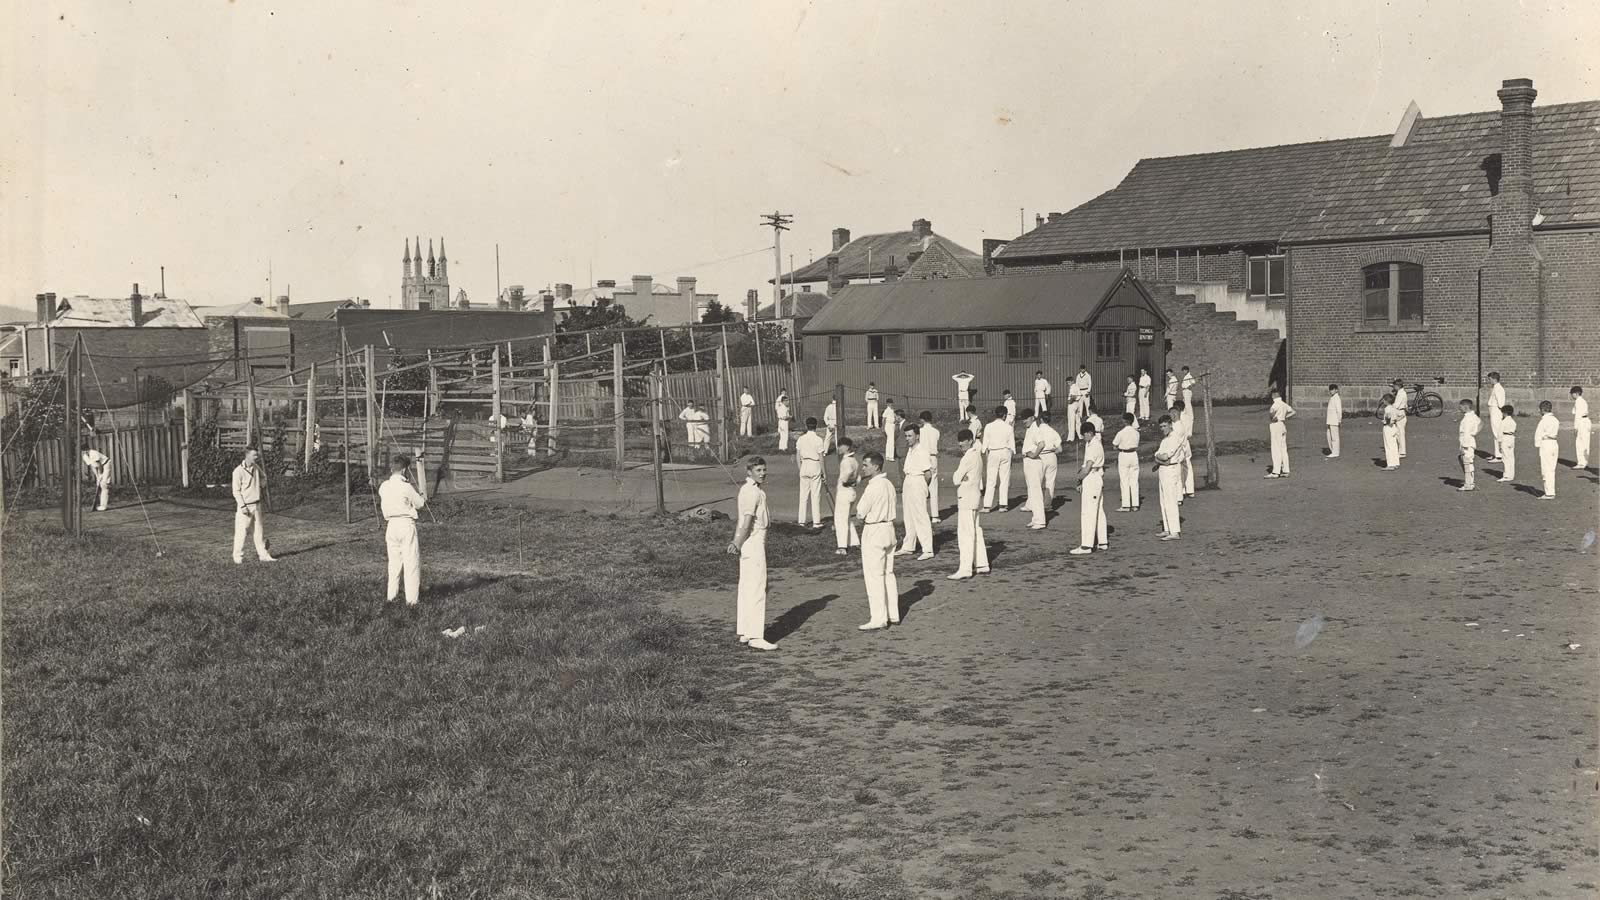 1929 cricket practice at Macquarie Street